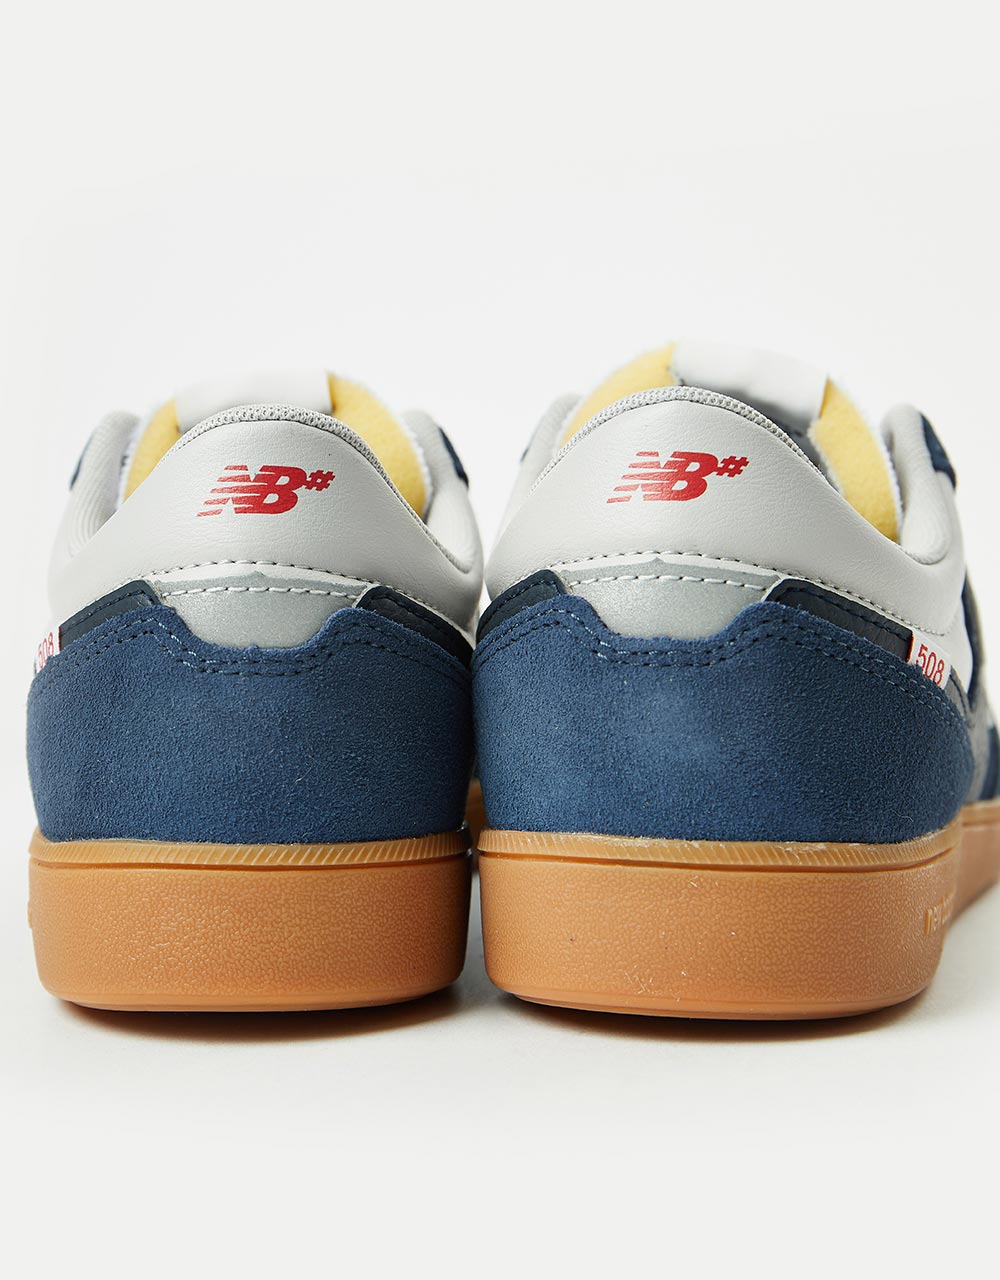 New Balance Numeric 508 Skate Shoes - Navy/Gum